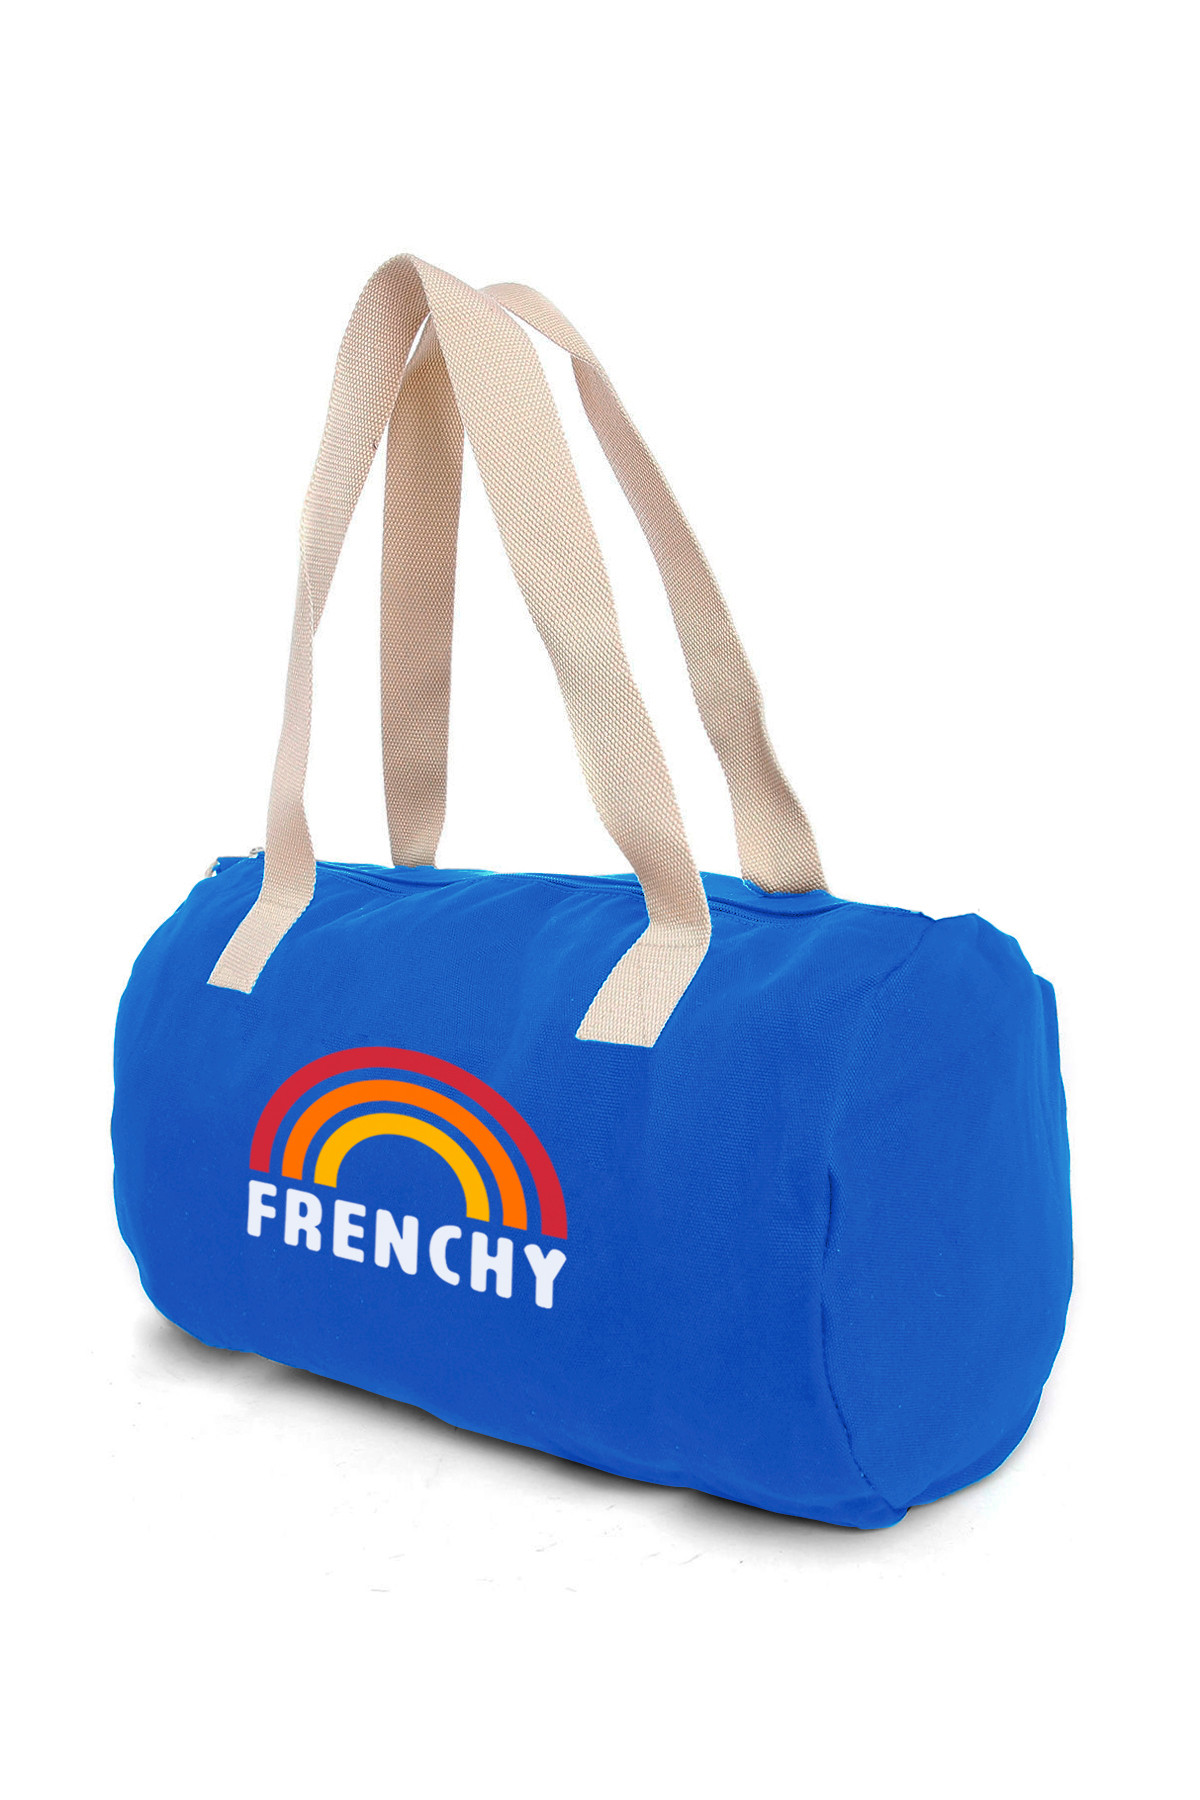 Photo de SACS Duffle Bag FRENCHY chez French Disorder